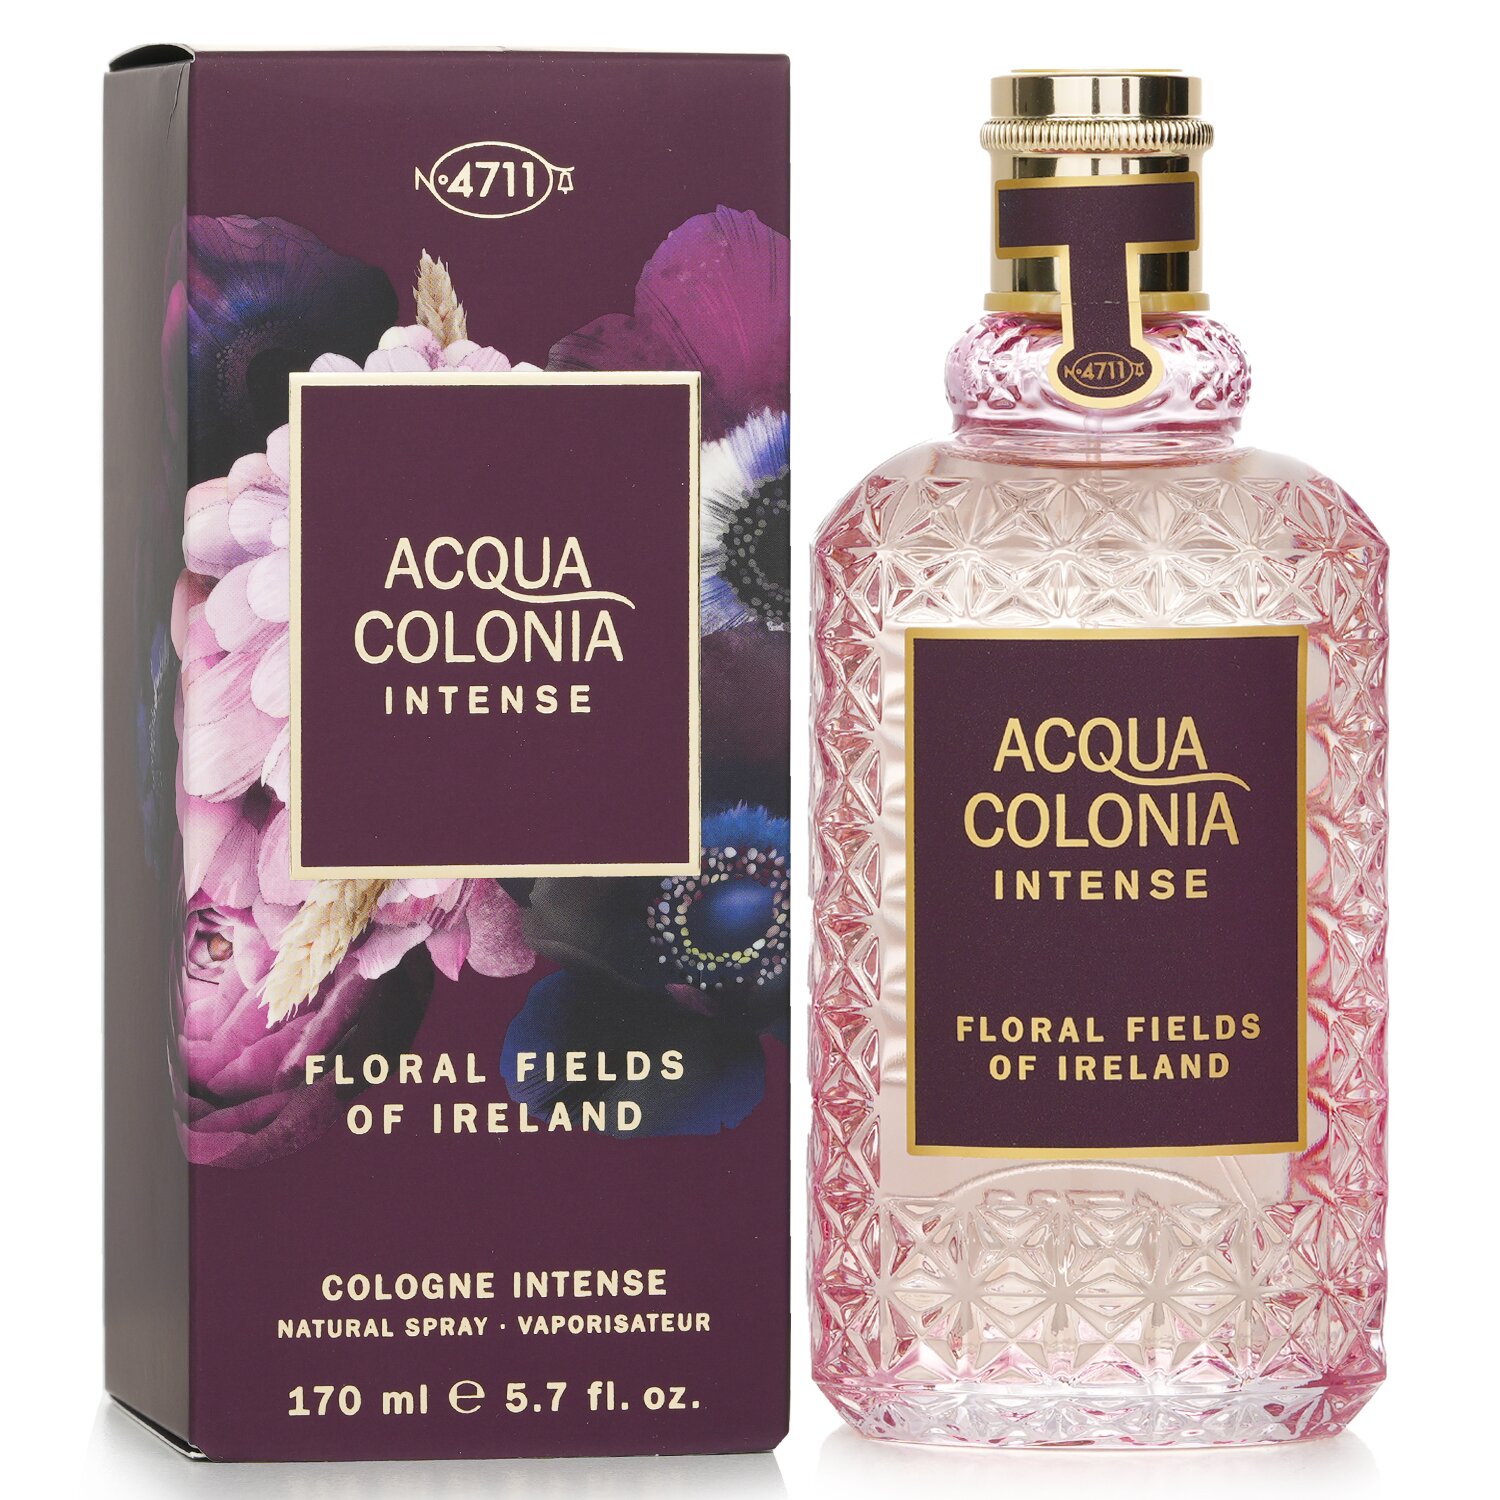 4711 Acqua Colonia Intense Floral Fields Of Ireland Eau De Cologne Spray 170ml/5.7oz